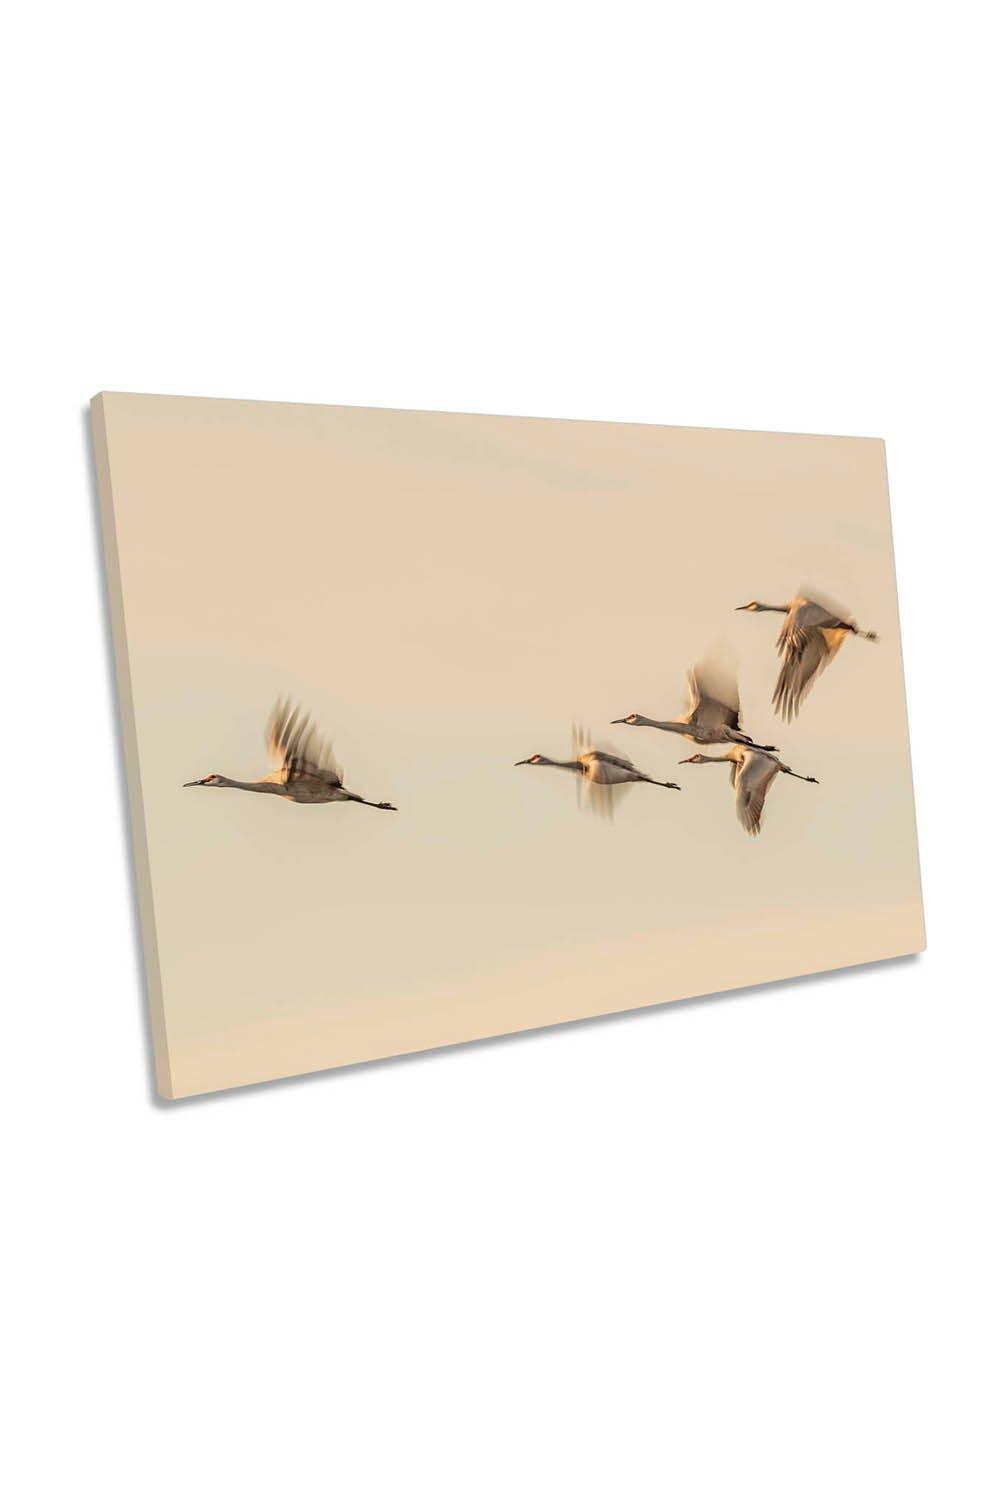 Crane Birds Flight Migration Canvas Wall Art Picture Print